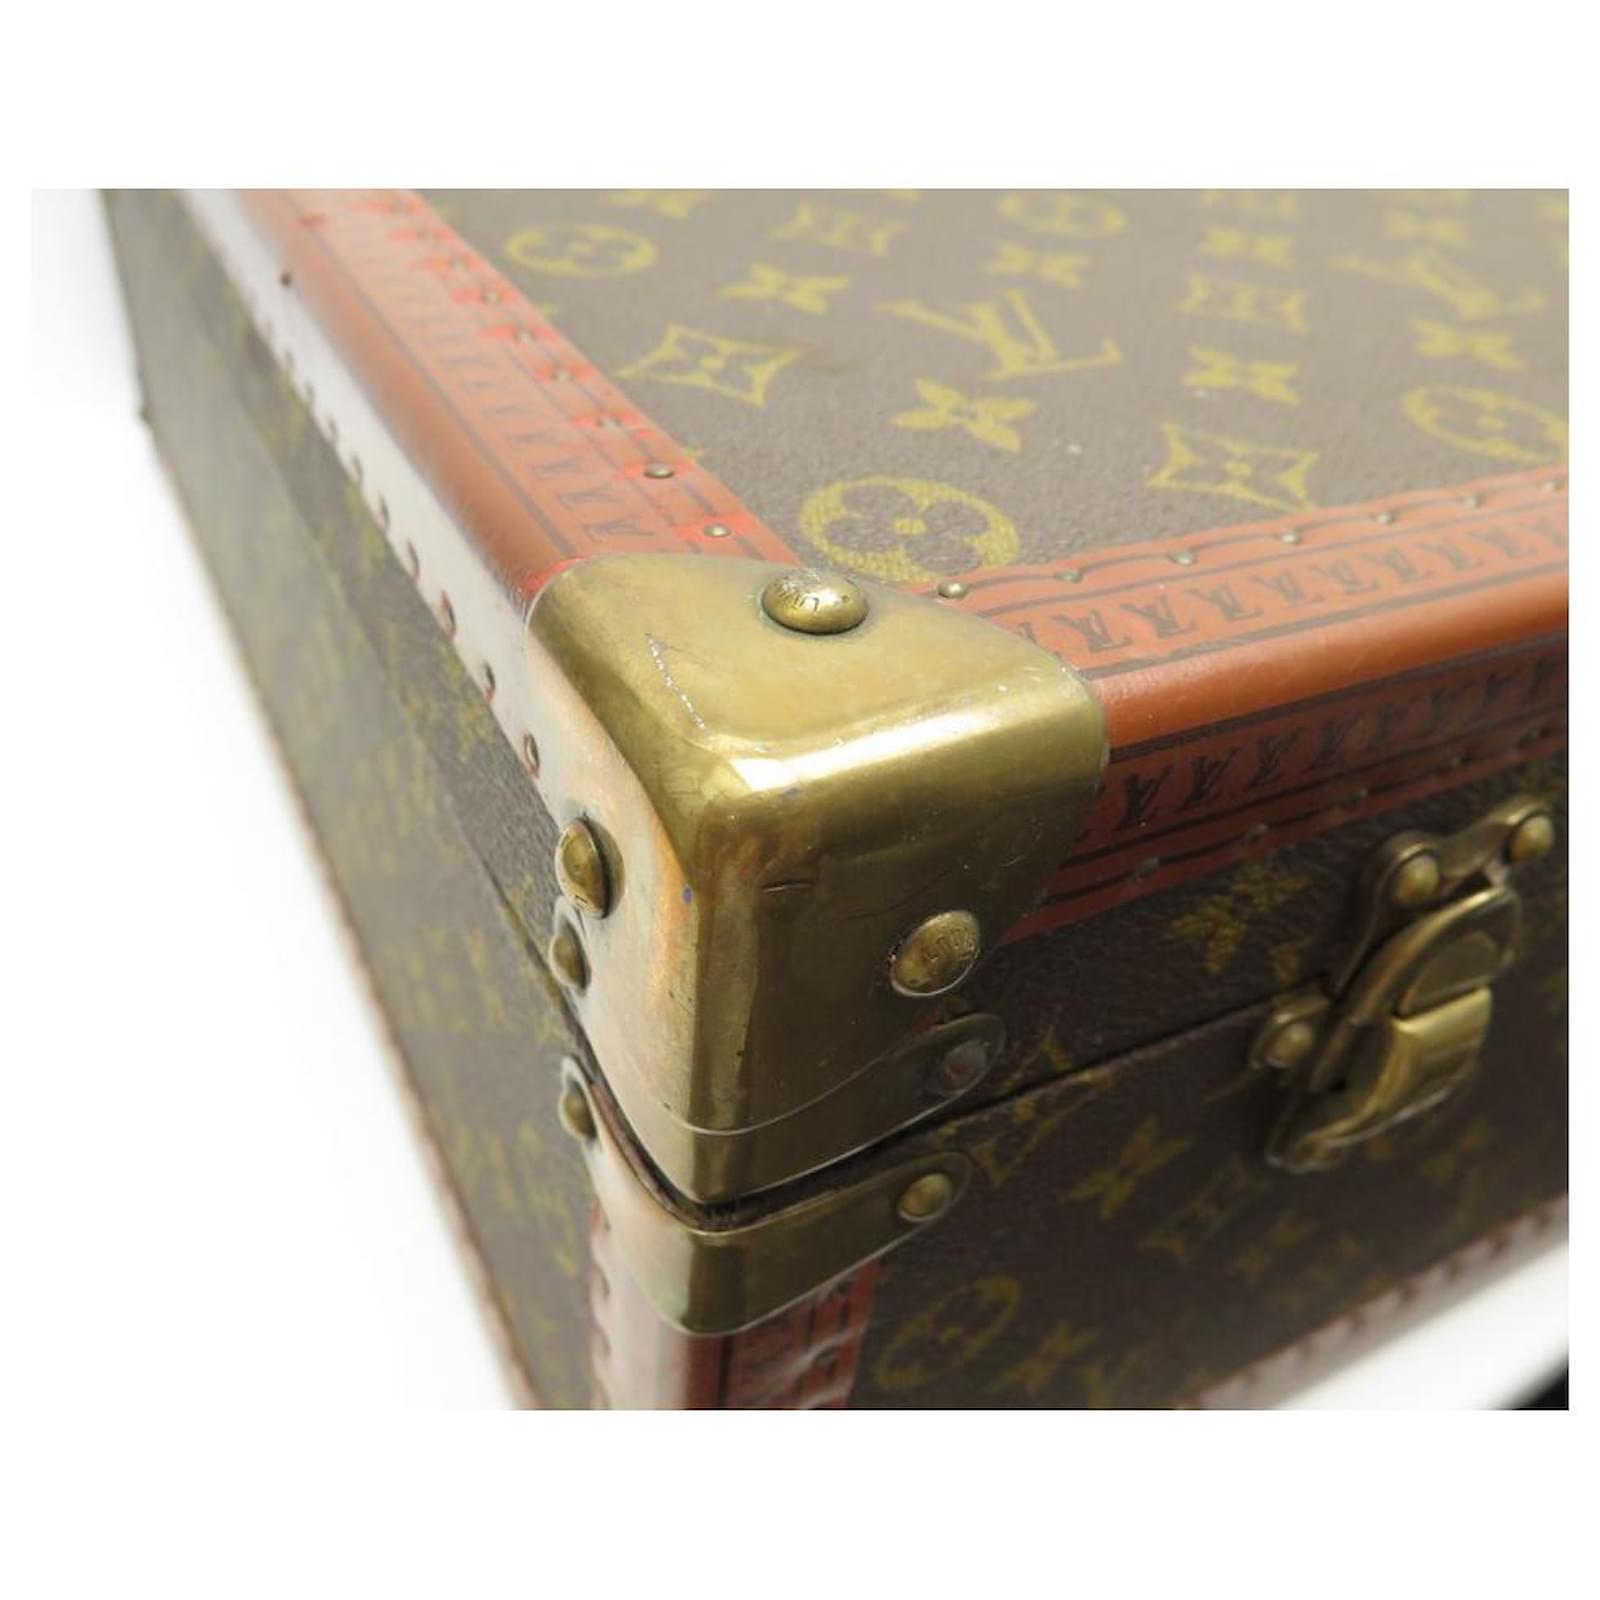 Alzer 70 Suitcase - Luxury Monogram Canvas Brown